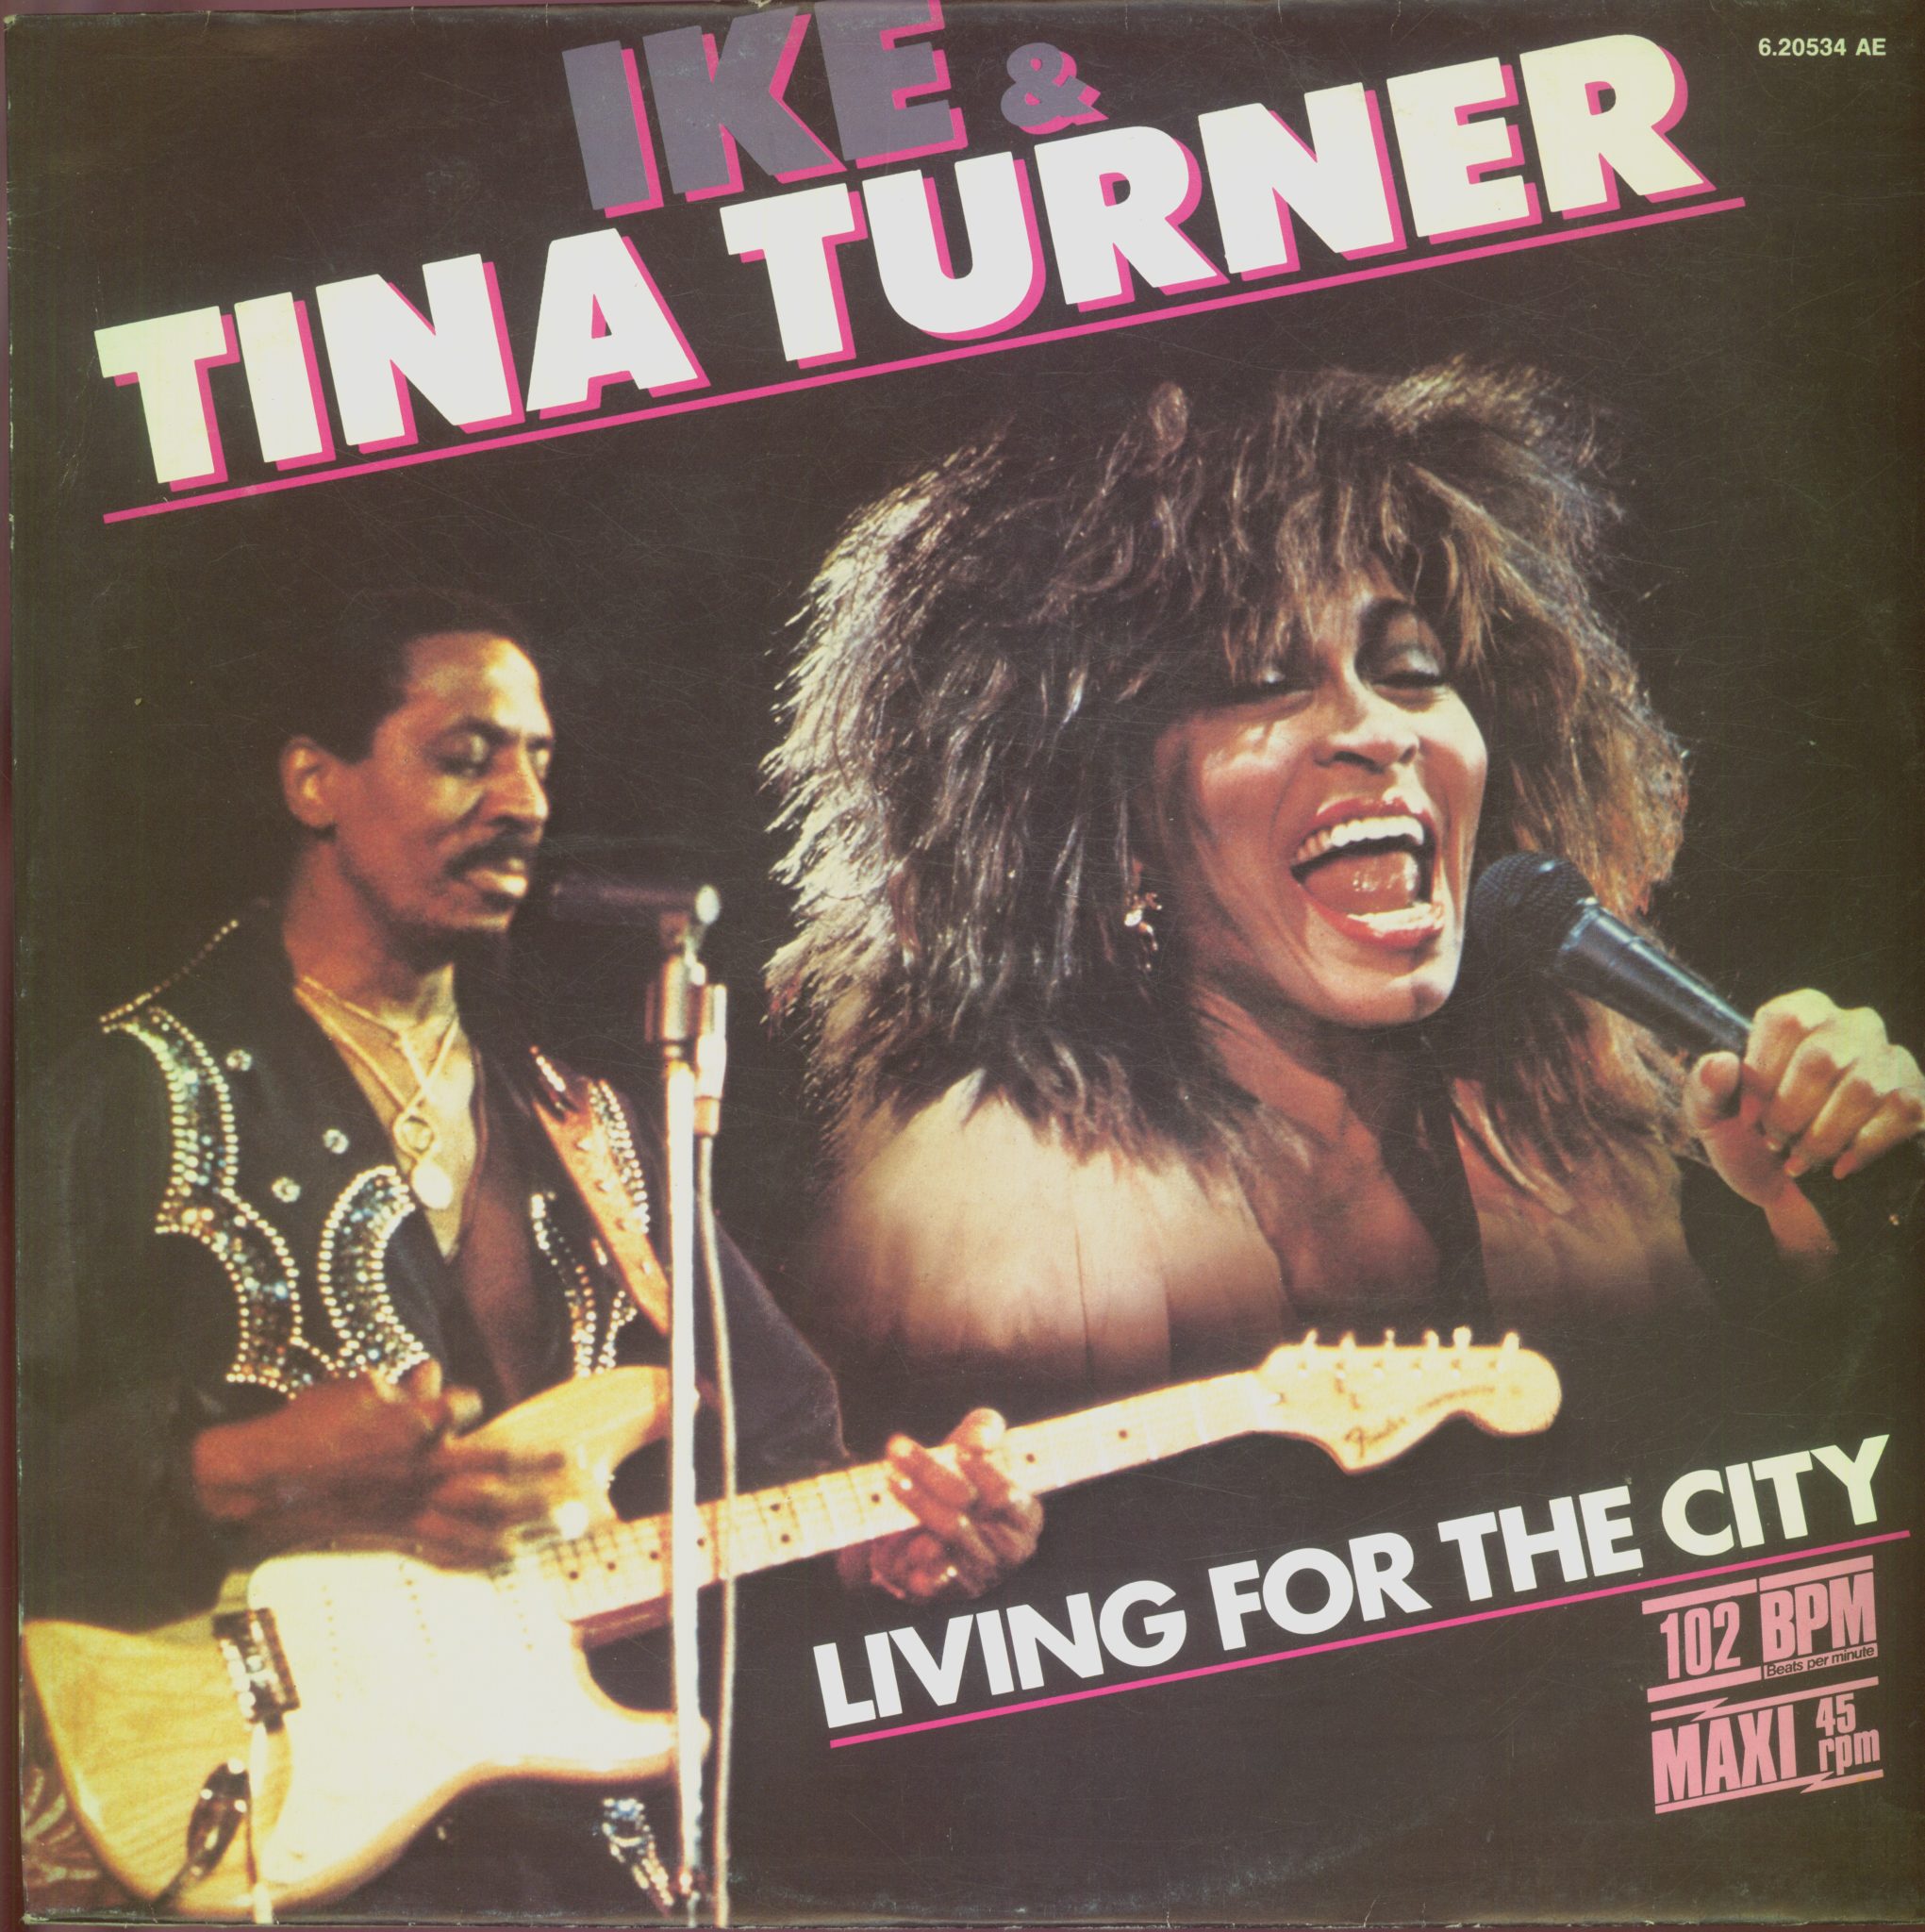 Gramofonska ploča Ike & Tina Turner Living For The City / Push 6.20534